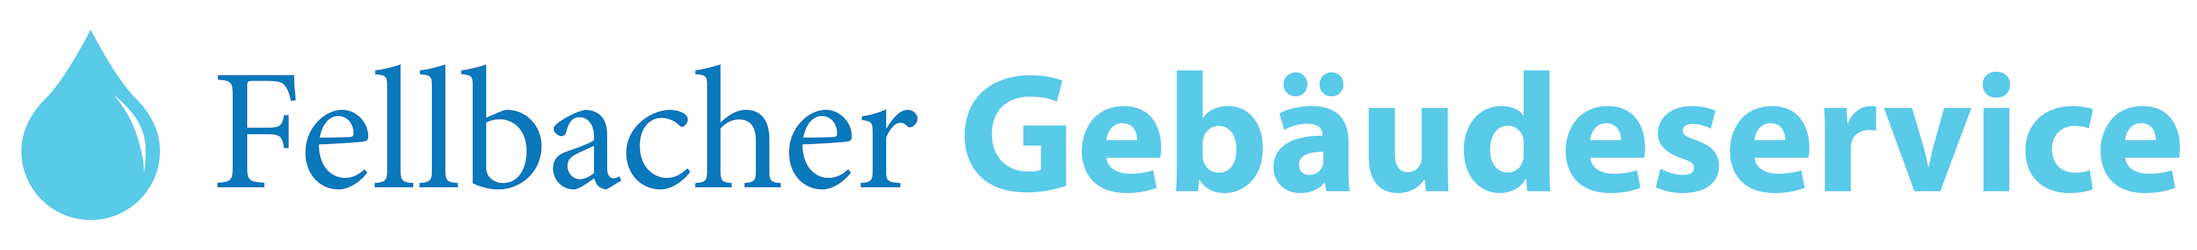 Fellbacher Gebaeudeservice